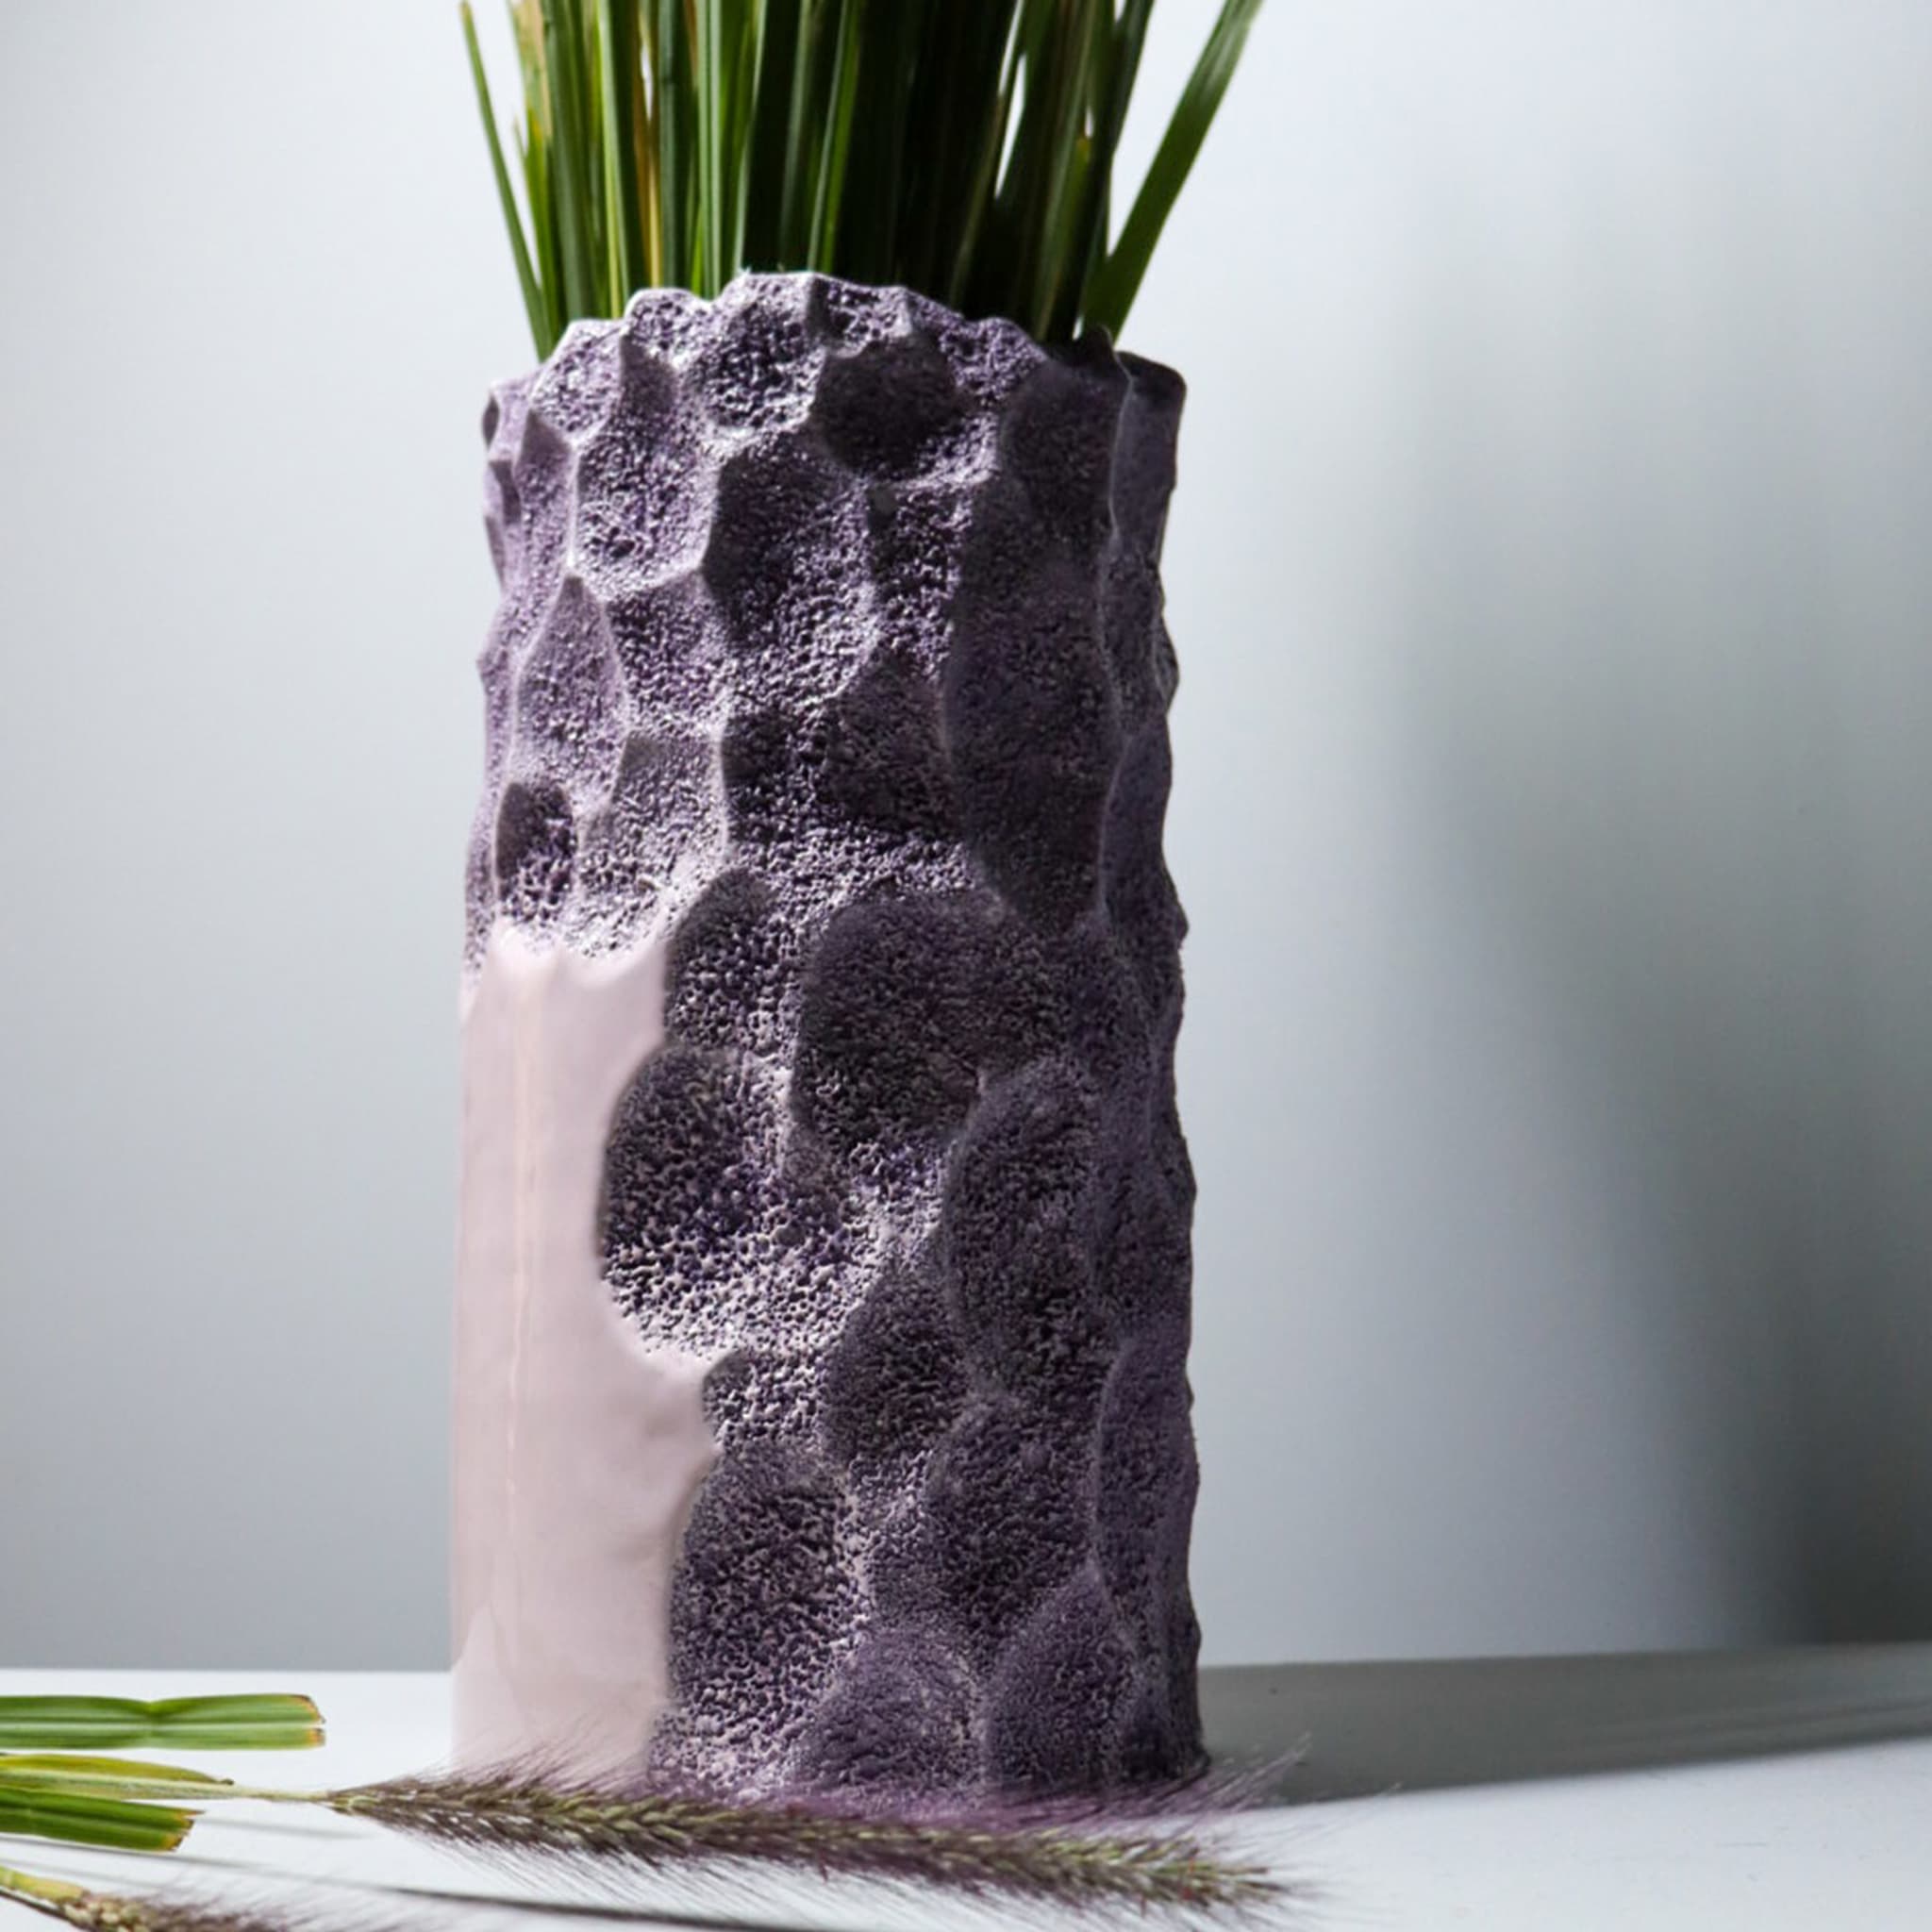 Oxymoron Pink Vase by Patricia Urquiola - Alternative view 4